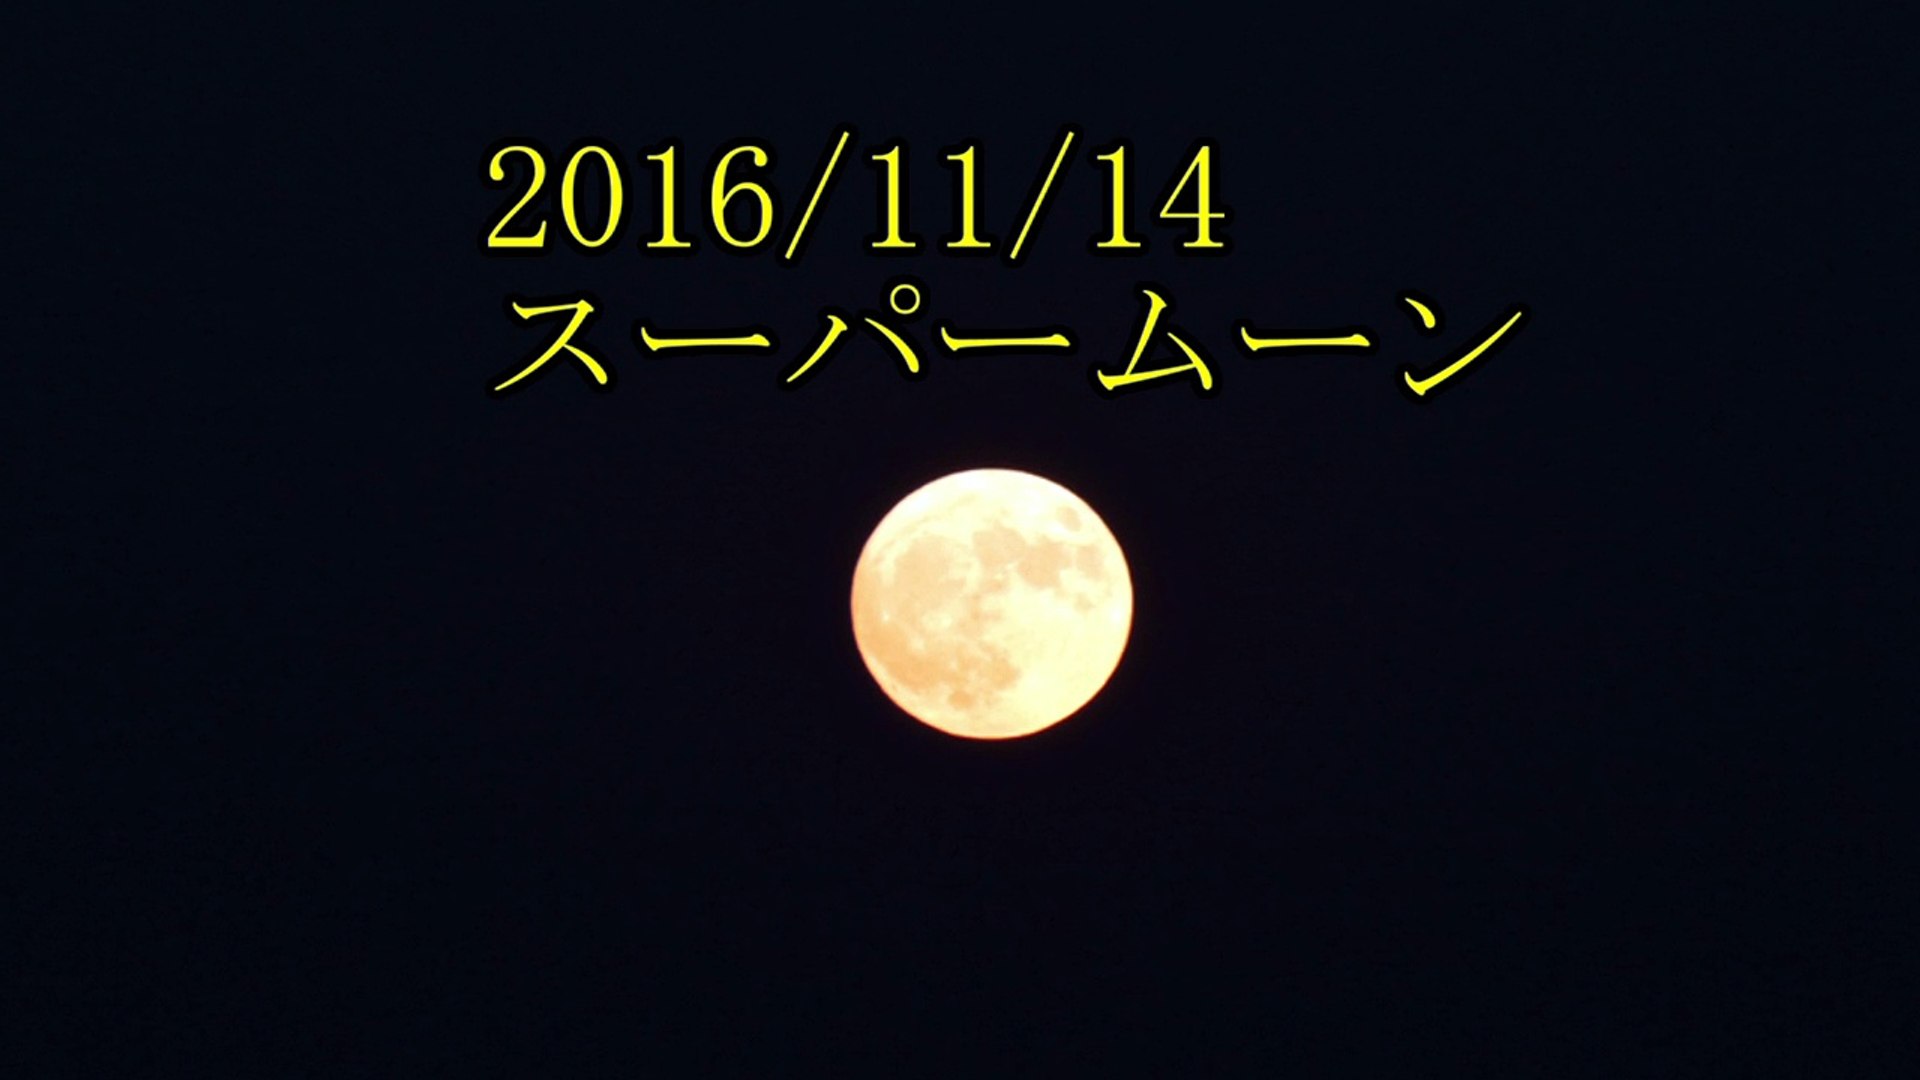 Super Moon In Akita Japan スーパームーン 秋田 Nov 14 16 動画 Dailymotion